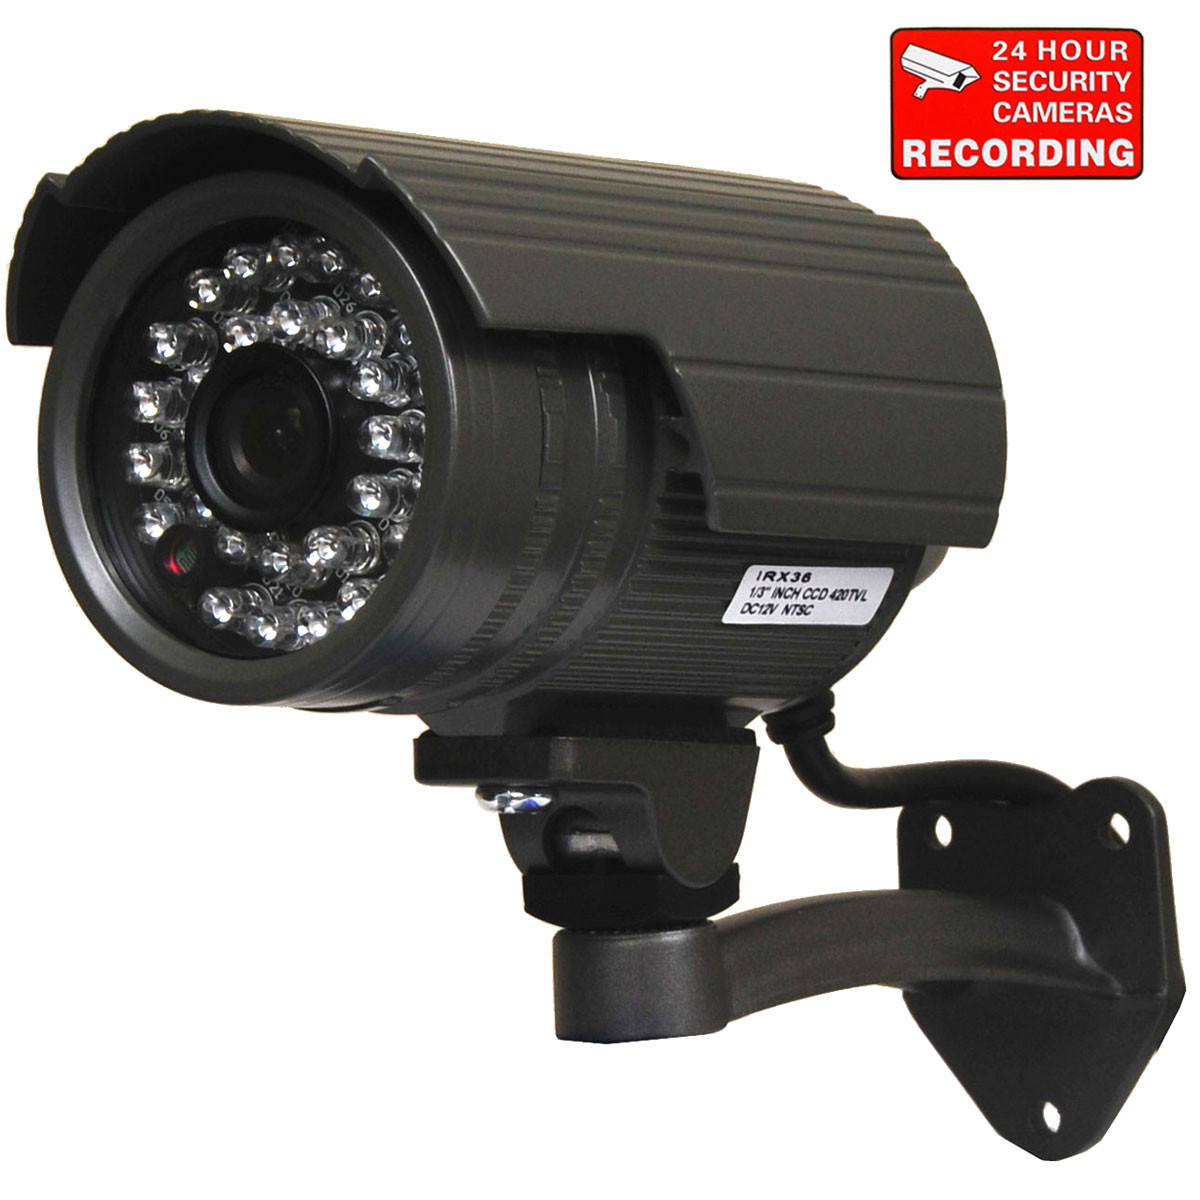 Talentoso chasquido Anémona de mar VideoSecu IRX36 1/3" SONY CCD IR CCTV Security Camera